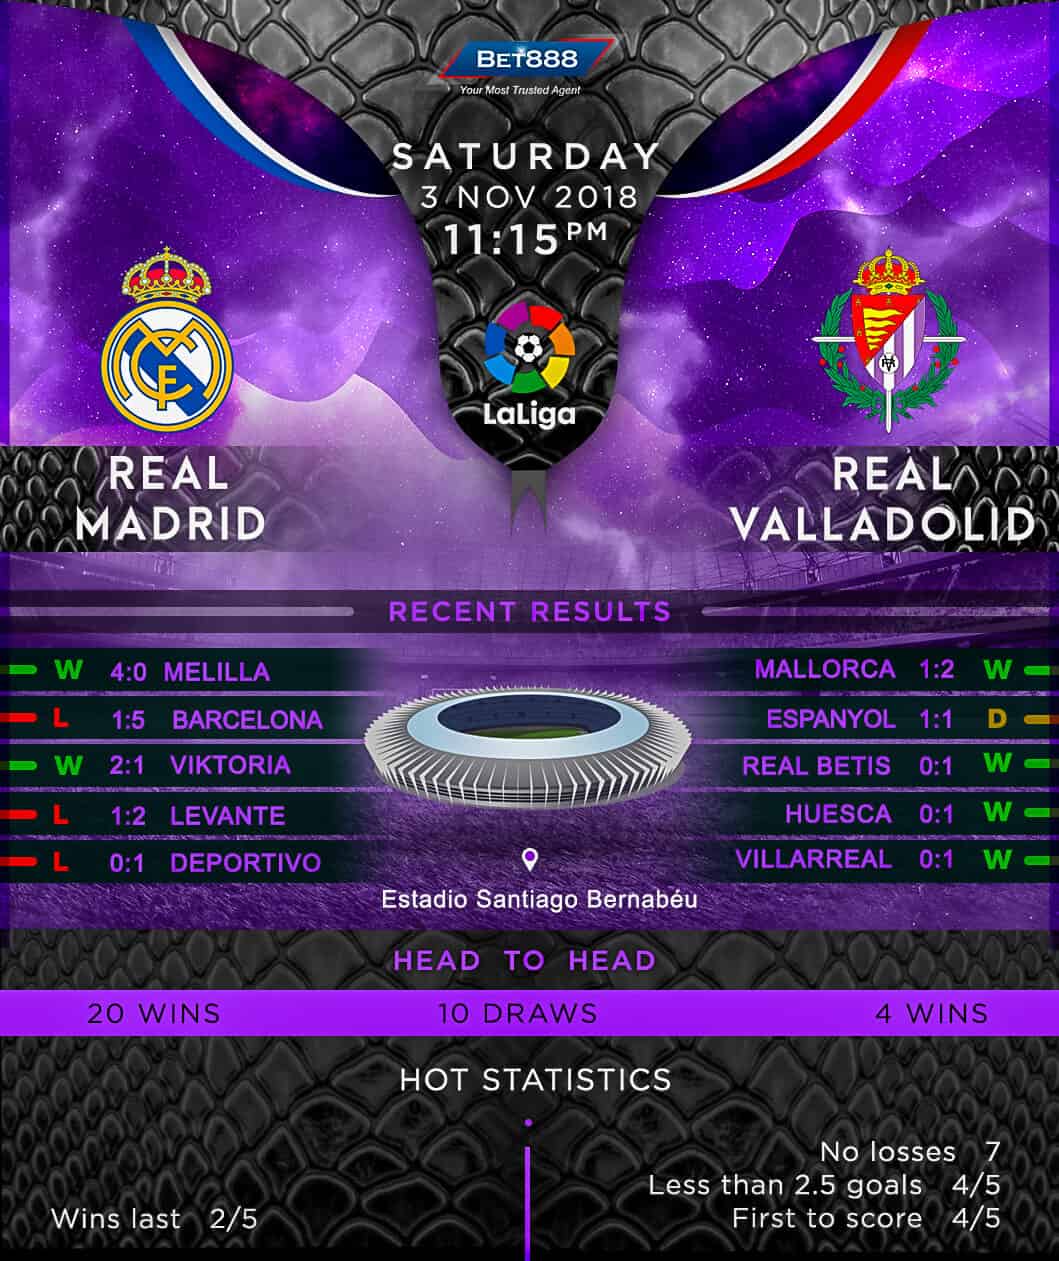 Real Madrid vs Real Valladolid 03/11/18